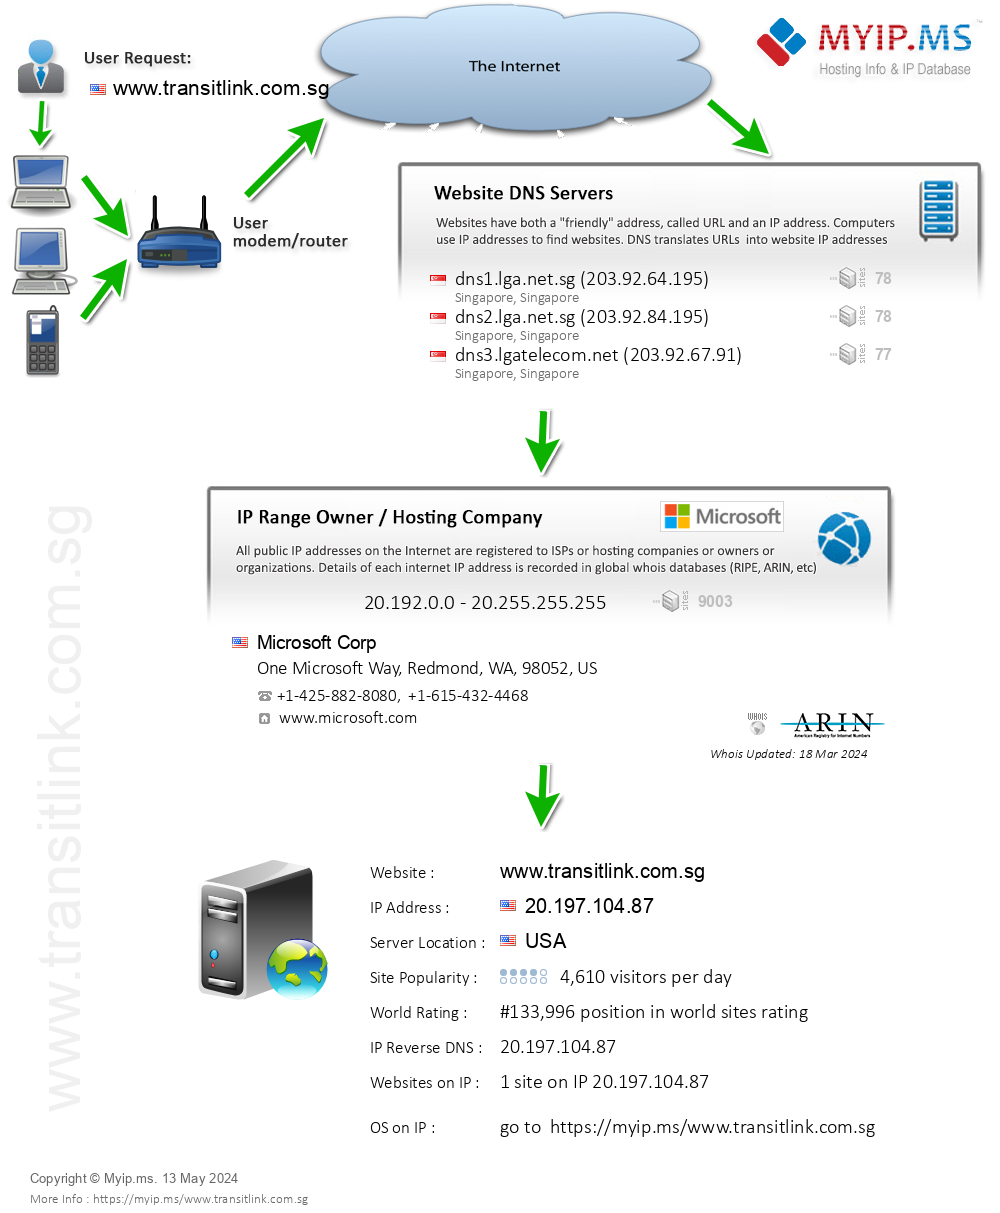 Transitlink.com.sg - Website Hosting Visual IP Diagram